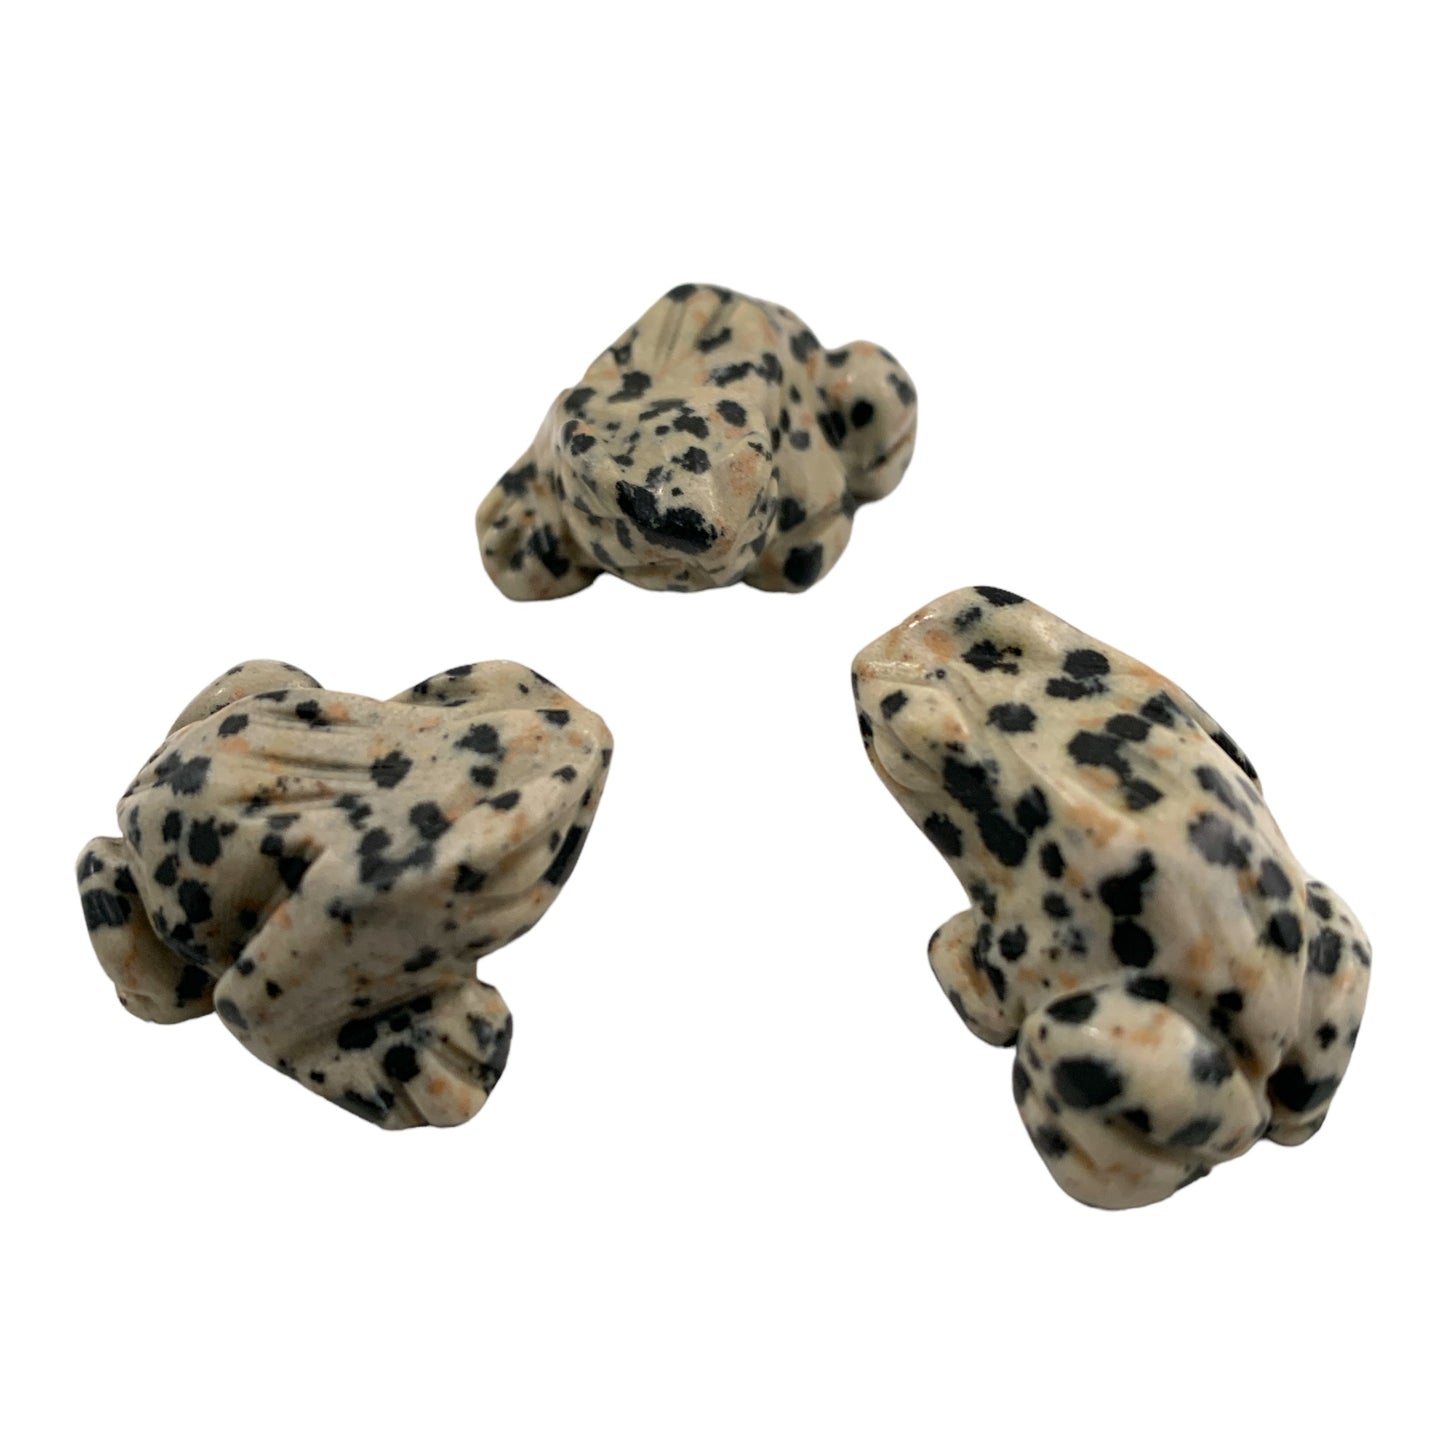 Baby Frog - Dalmatian Jasper - 1 inch - Price Each - NEW922